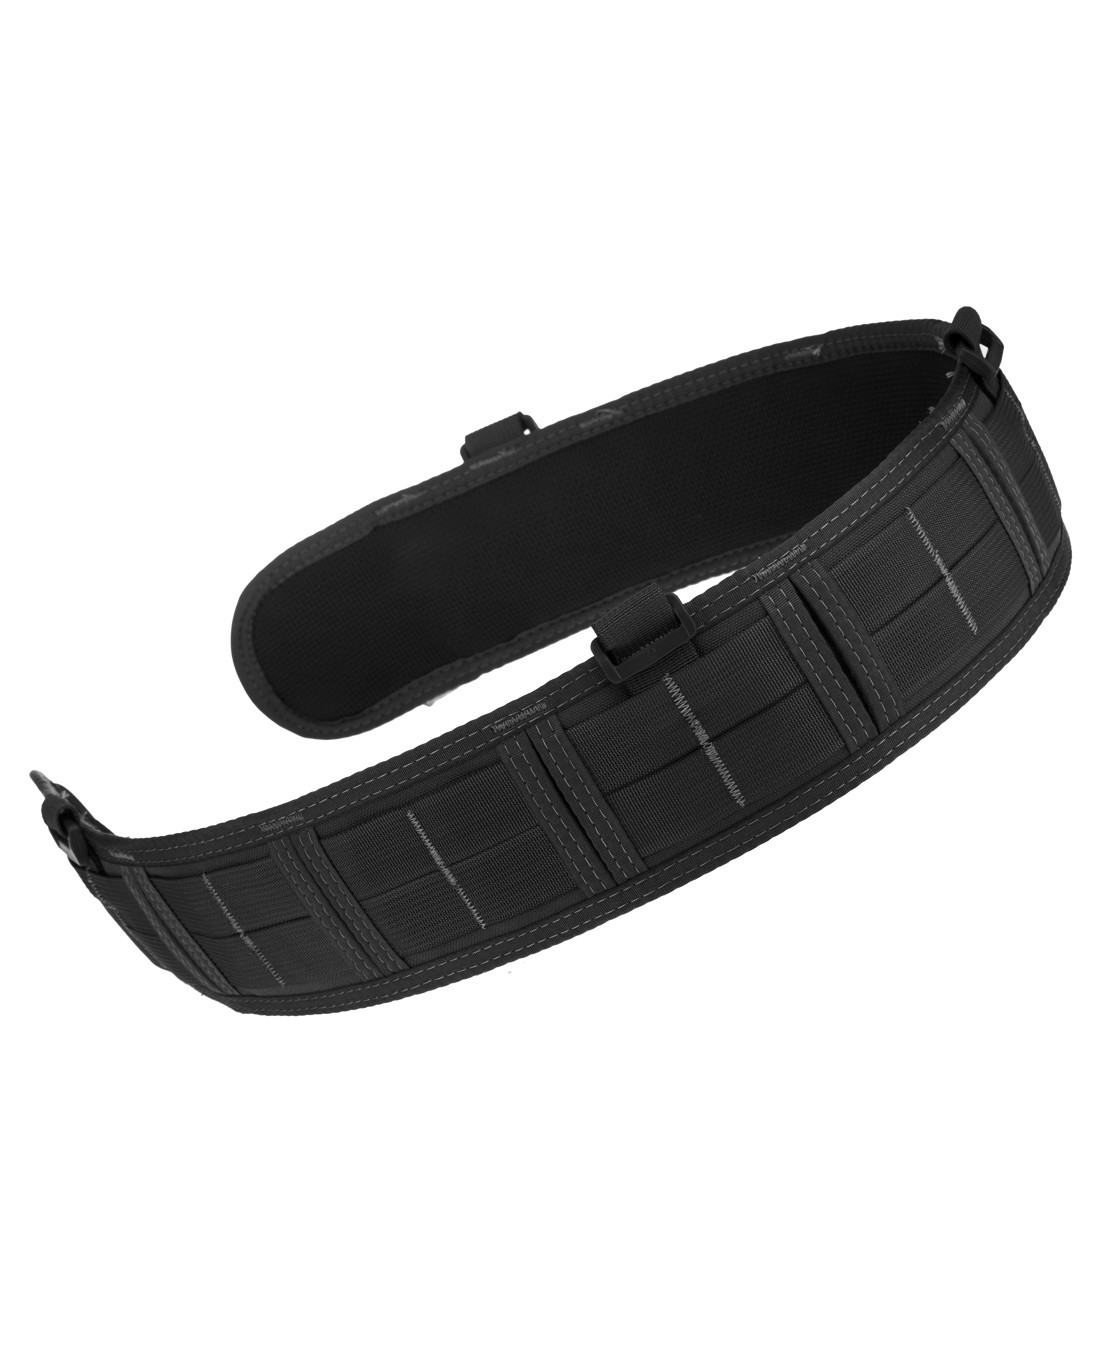 High Speed Gear Slim Grip Padded Belt Slotted Black 33spb0bk Xx Tacwrk